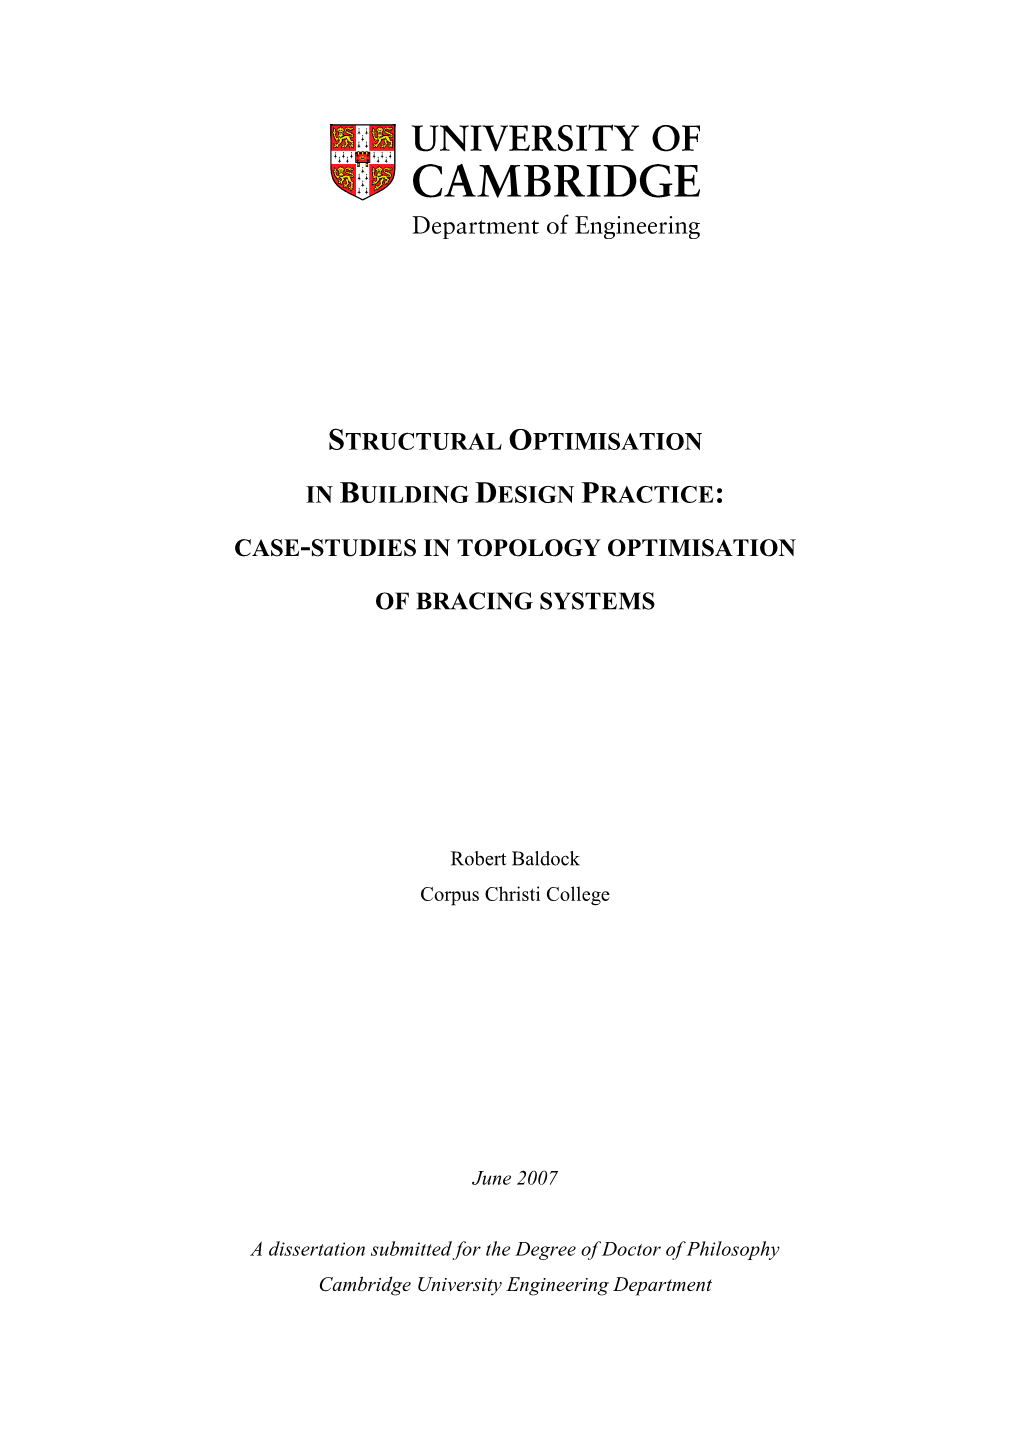 Case-Studies in Topology Optimisation of Bracing Systems ROBERT BALDOCK